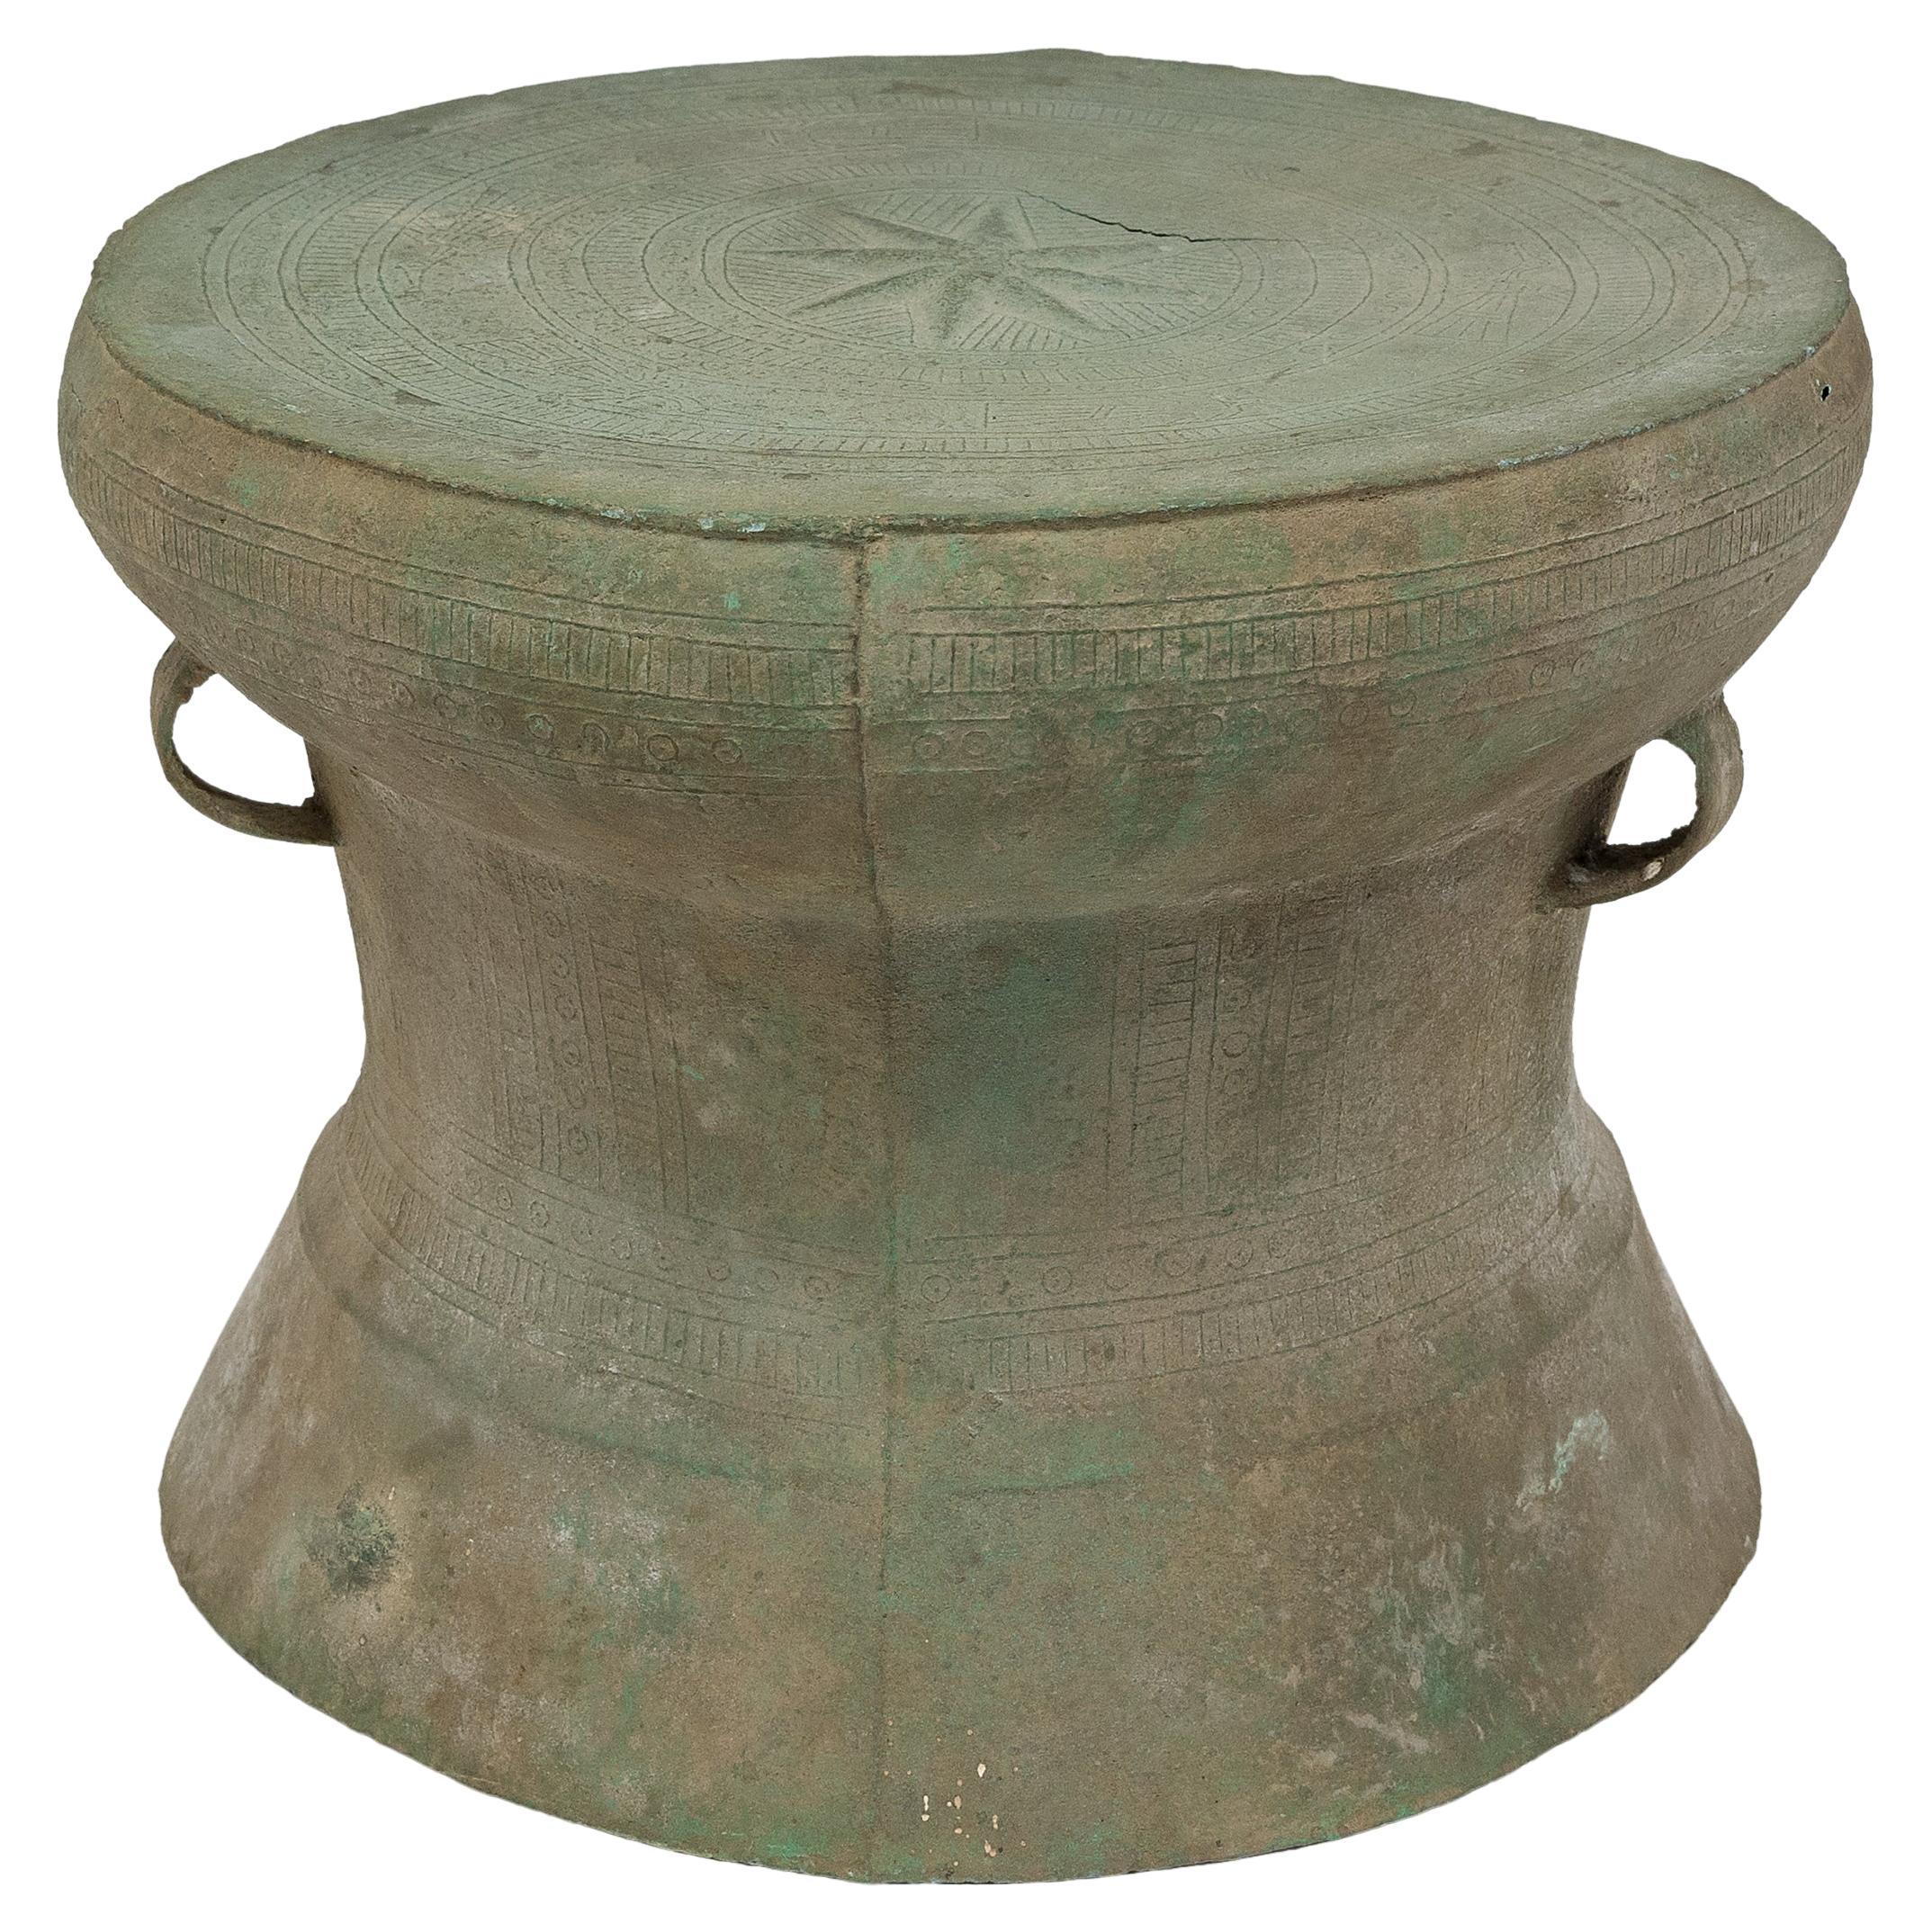 Southeast Asian Dong Son Bronze Ritual Drum, c. 200 BC